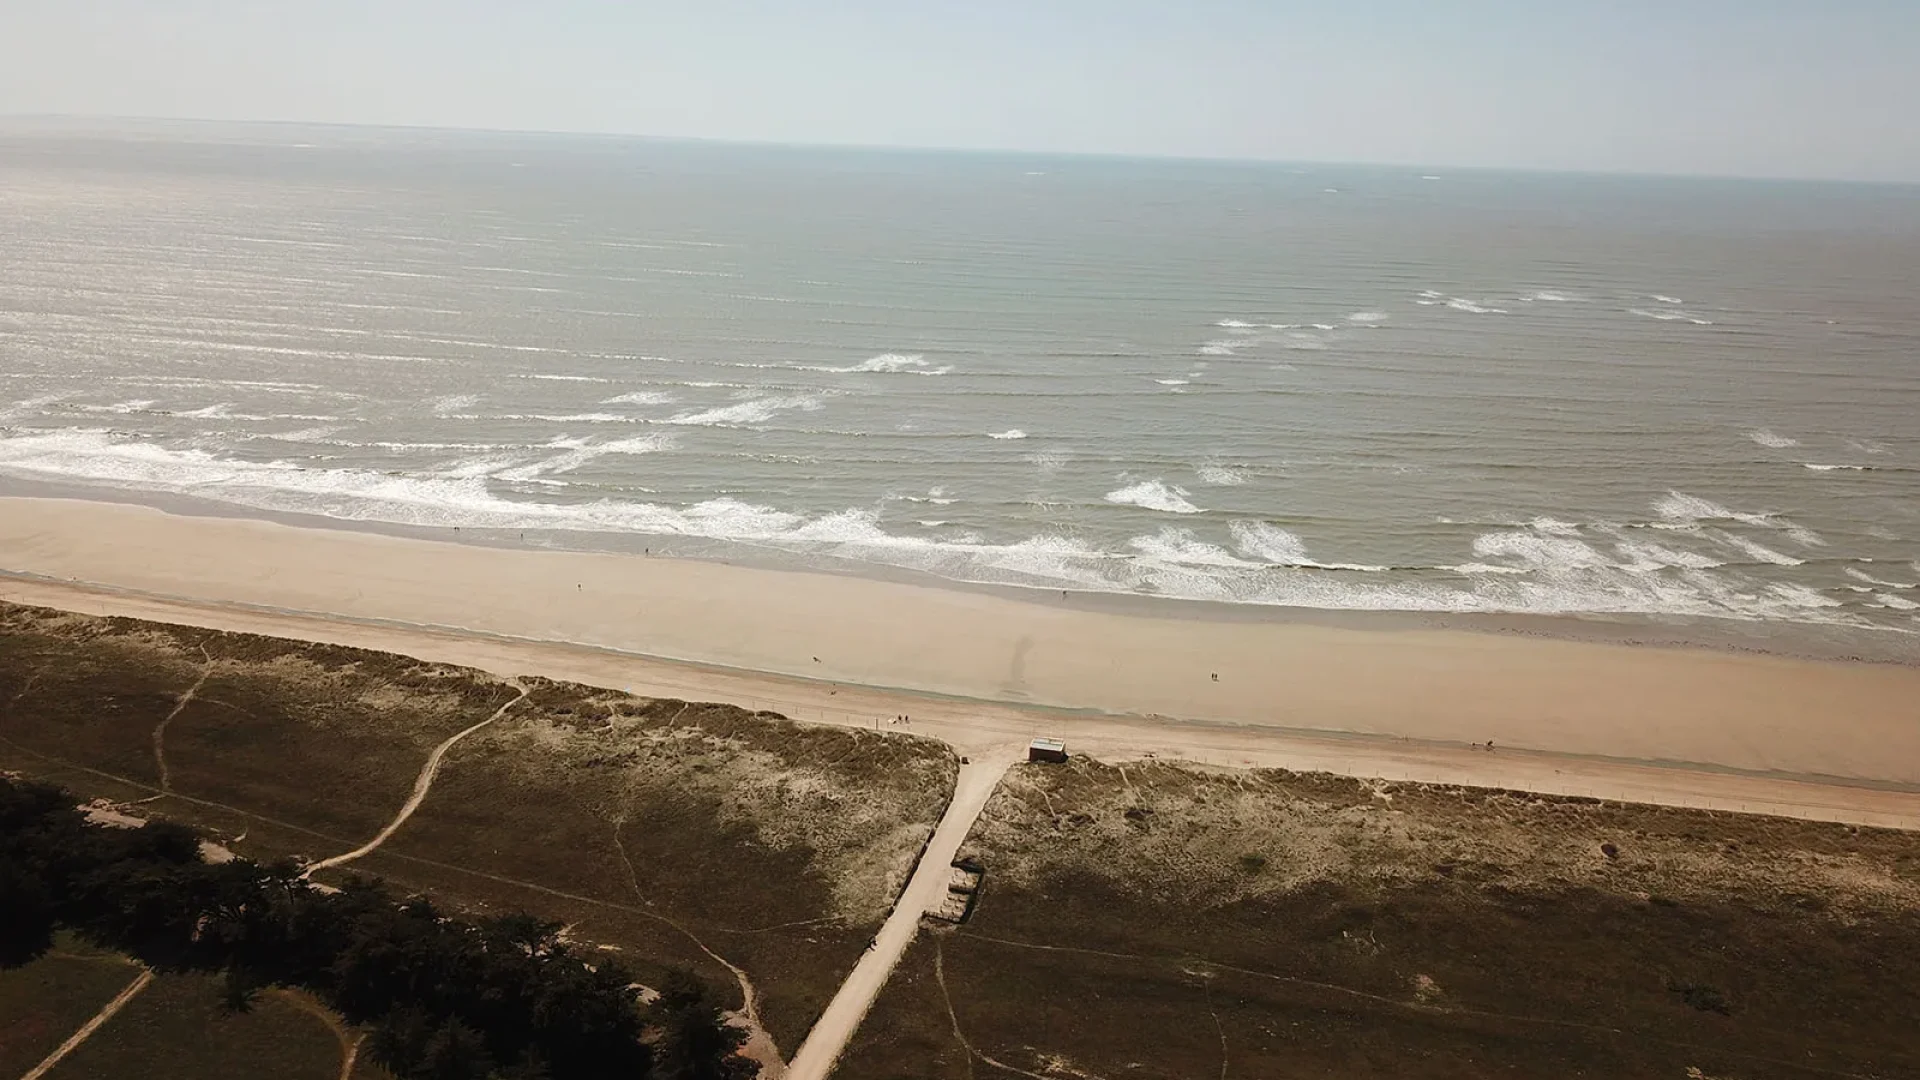 La bergère beach at la barre de monts - fromentine seen from a drone